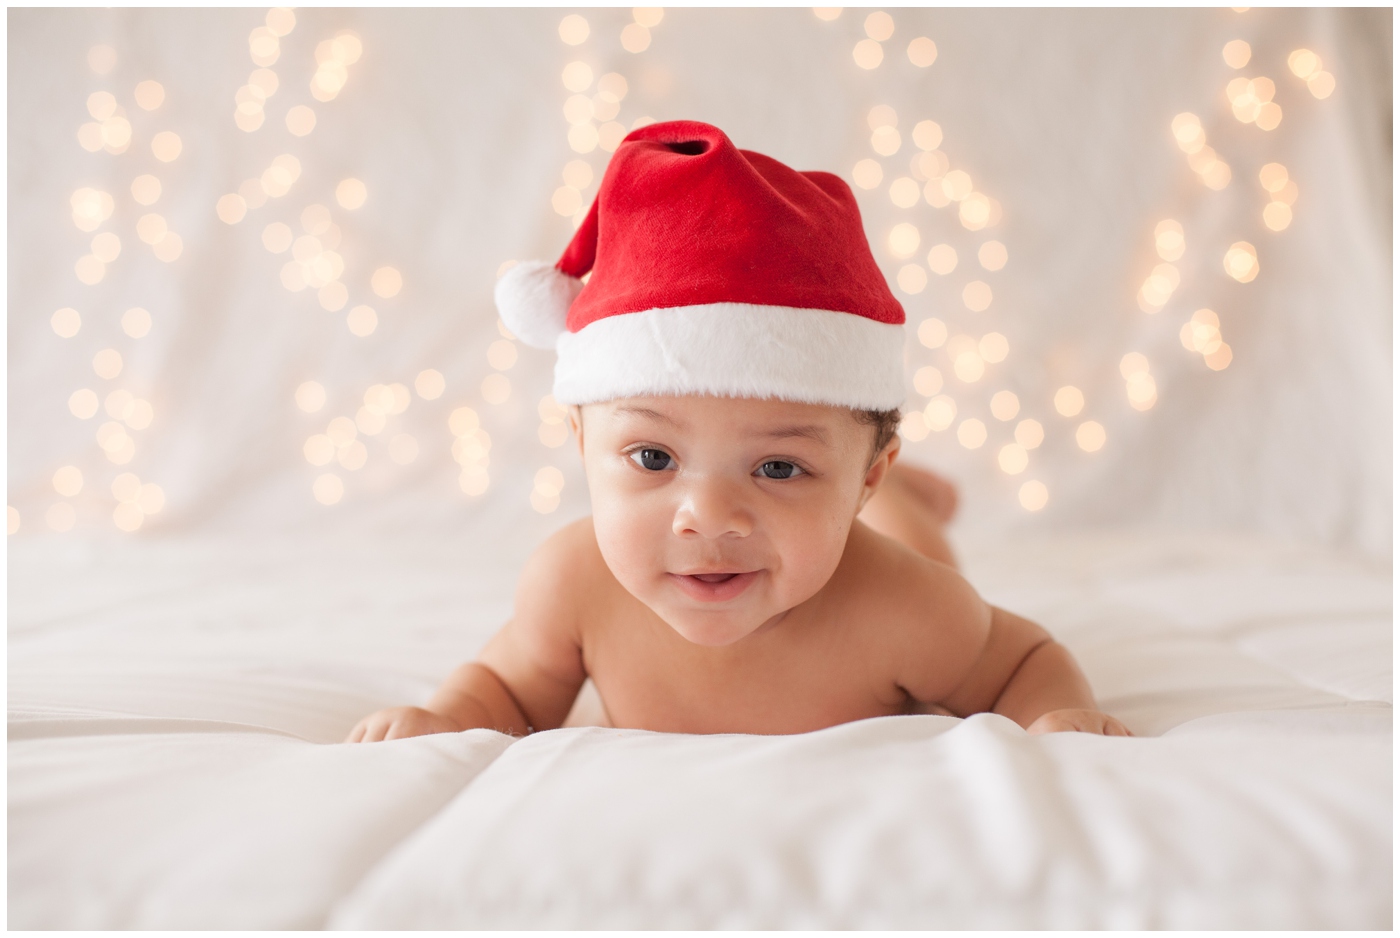 Koa's Christmas Pictures | DIY Baby and Christmas Lights Photography ...